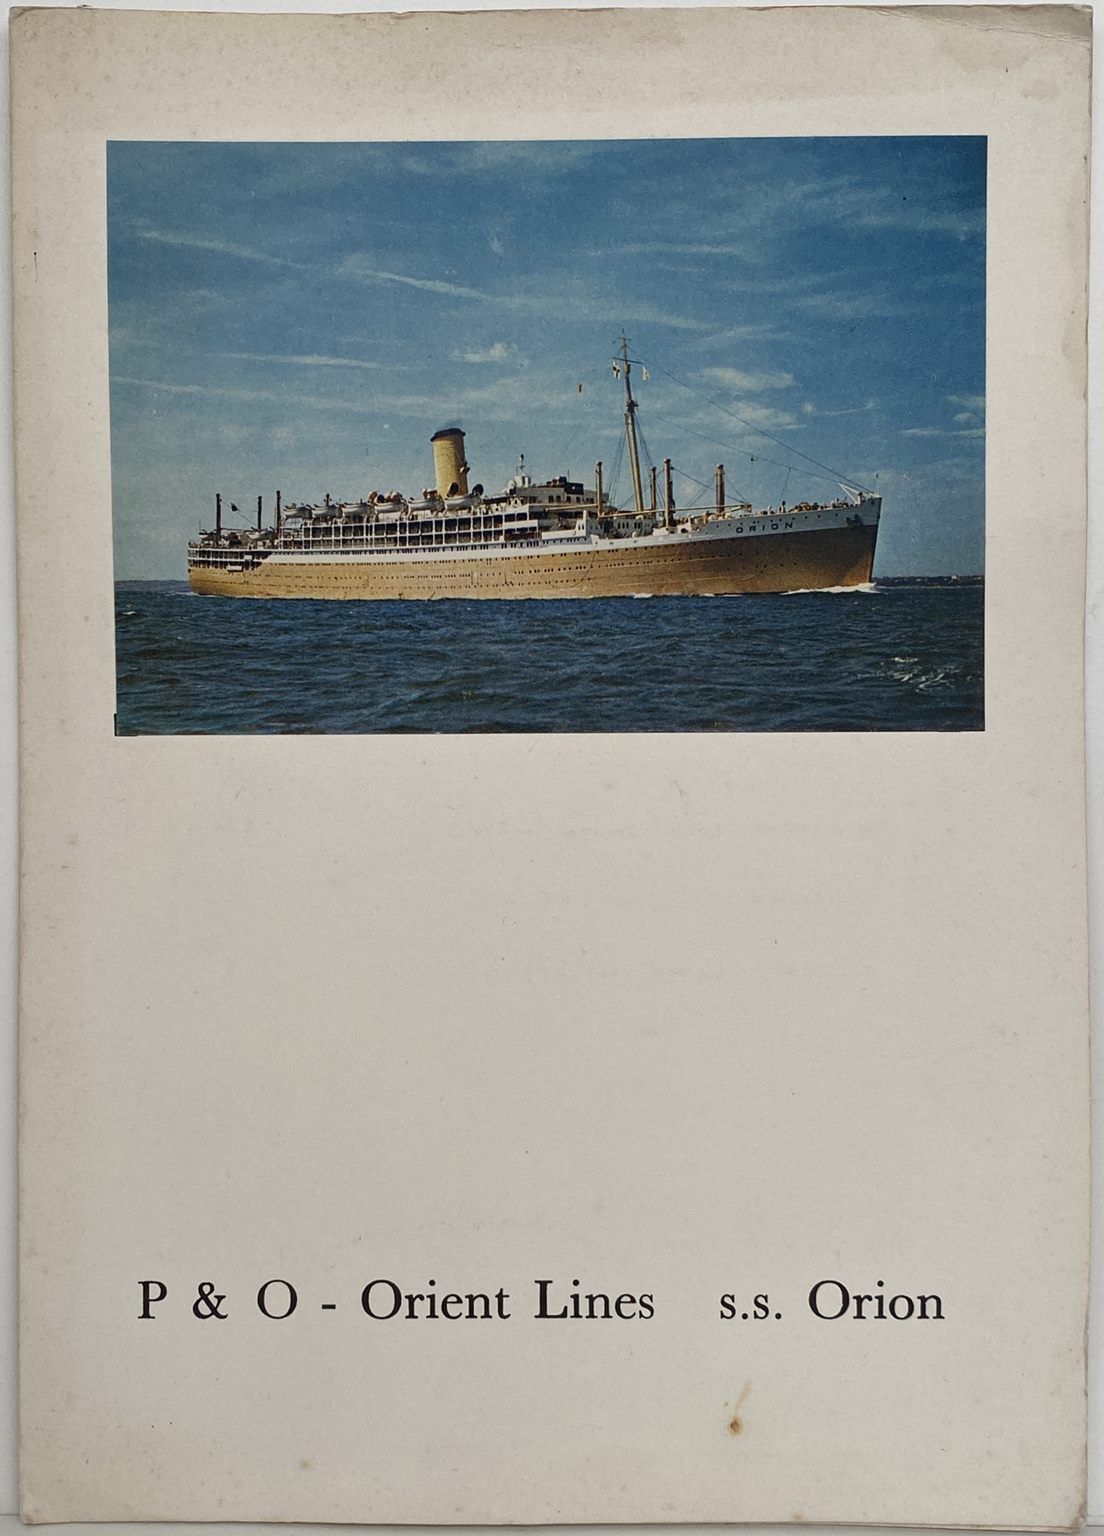 MARITIME MEMORABILIA: P&O Orient Lines - S.S. Orion - Dinner Menu 13th May 1962